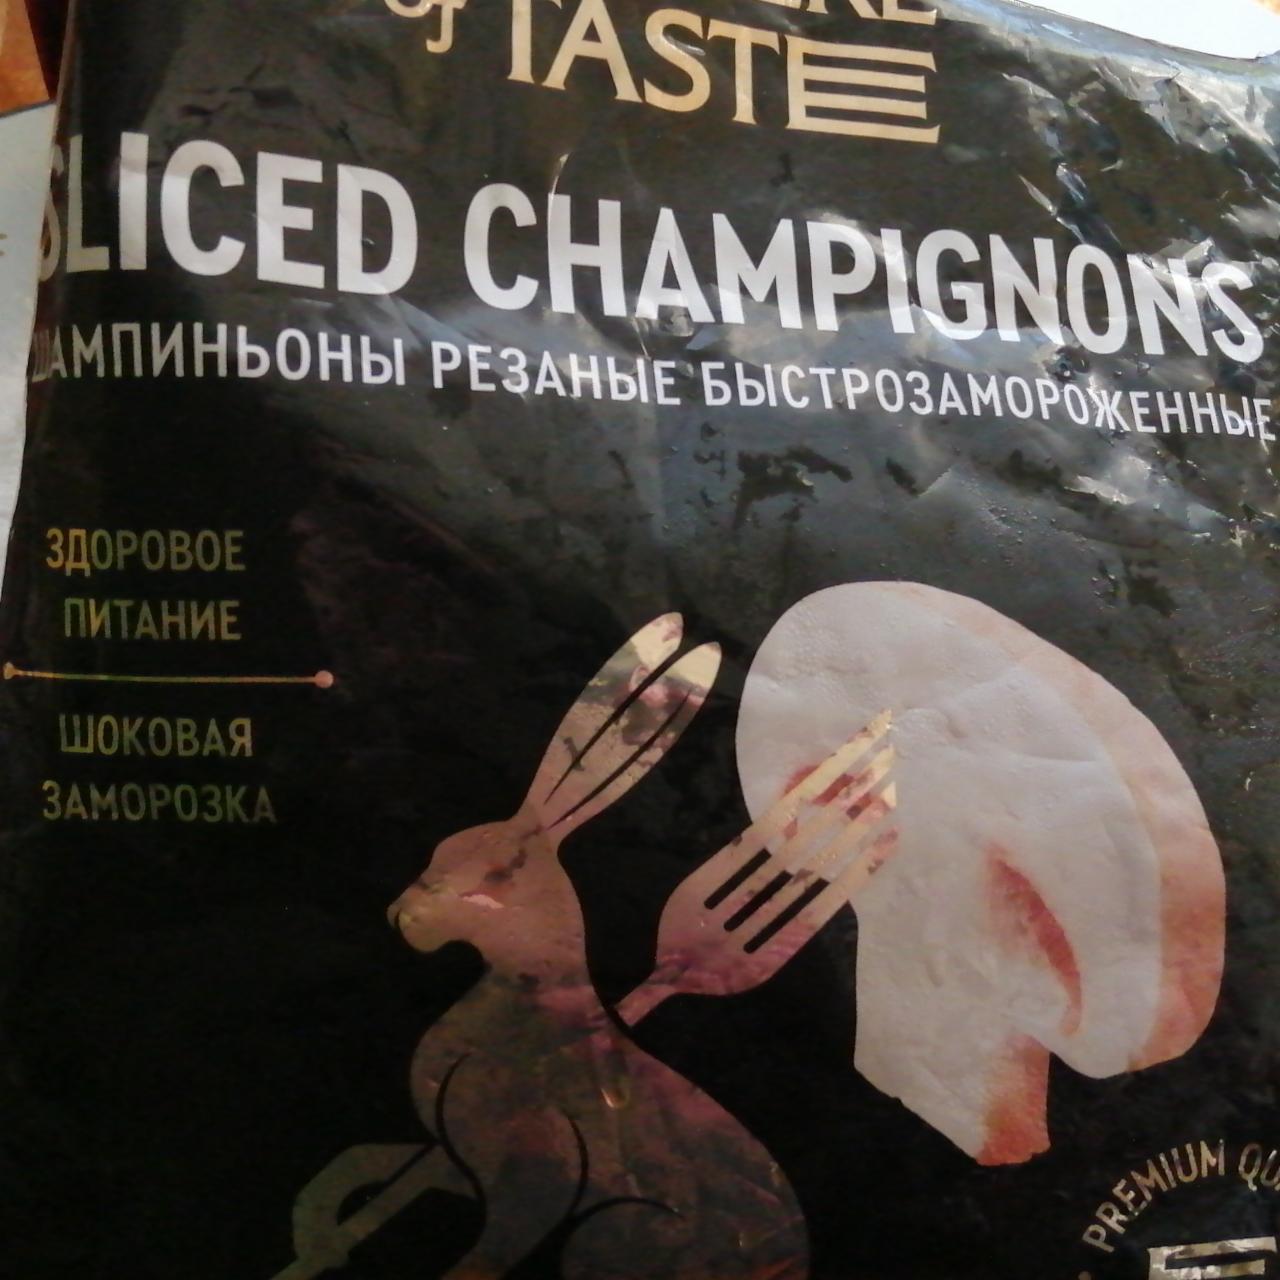 Фото - Шампиньоны быстрозамороженные резанные sliced champignons Premiere of taste